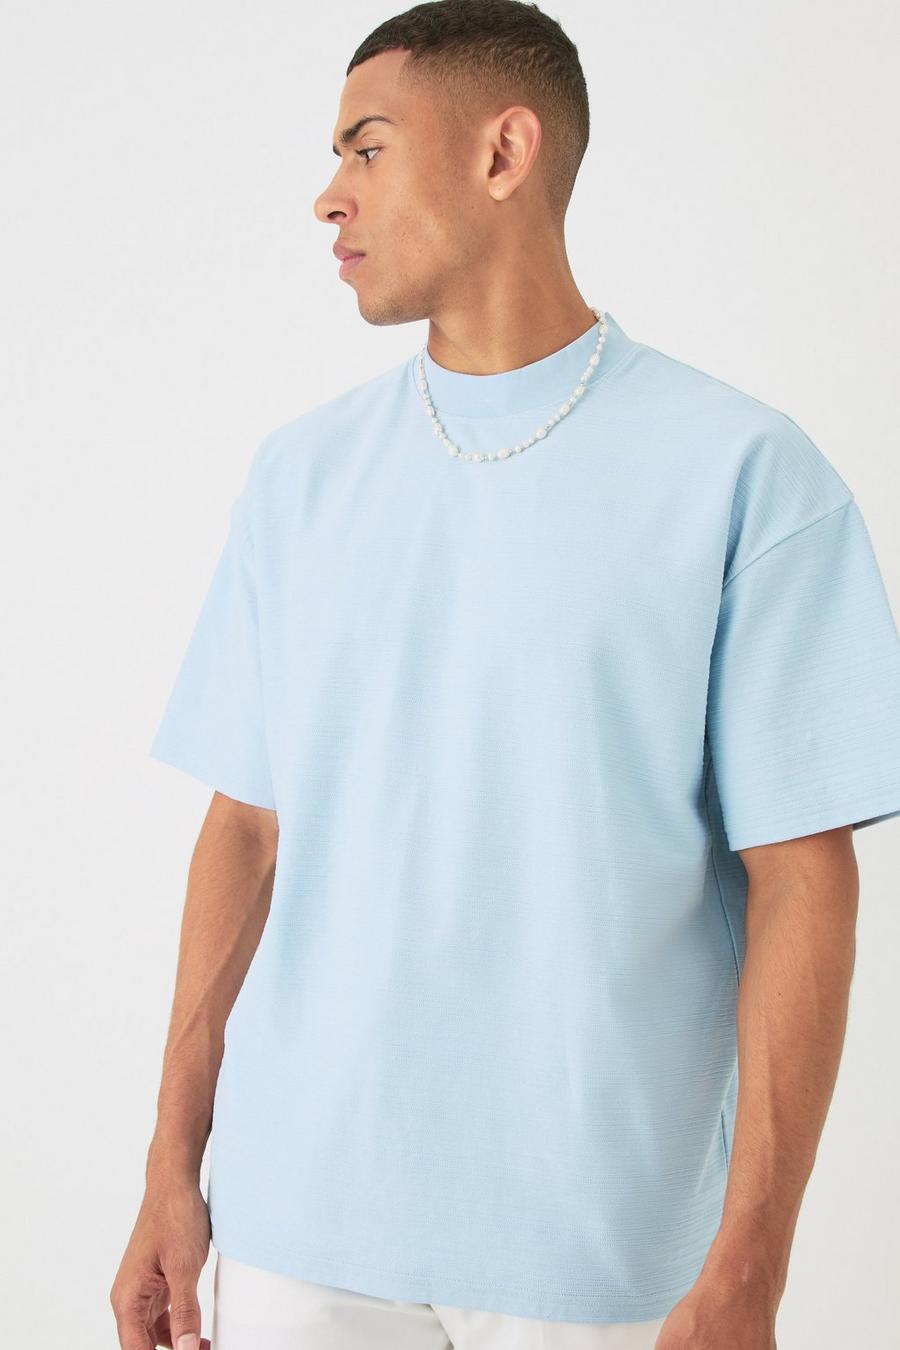 Oversized Jacquard Raised Striped Extended Neck T-shirt, Dusty blue